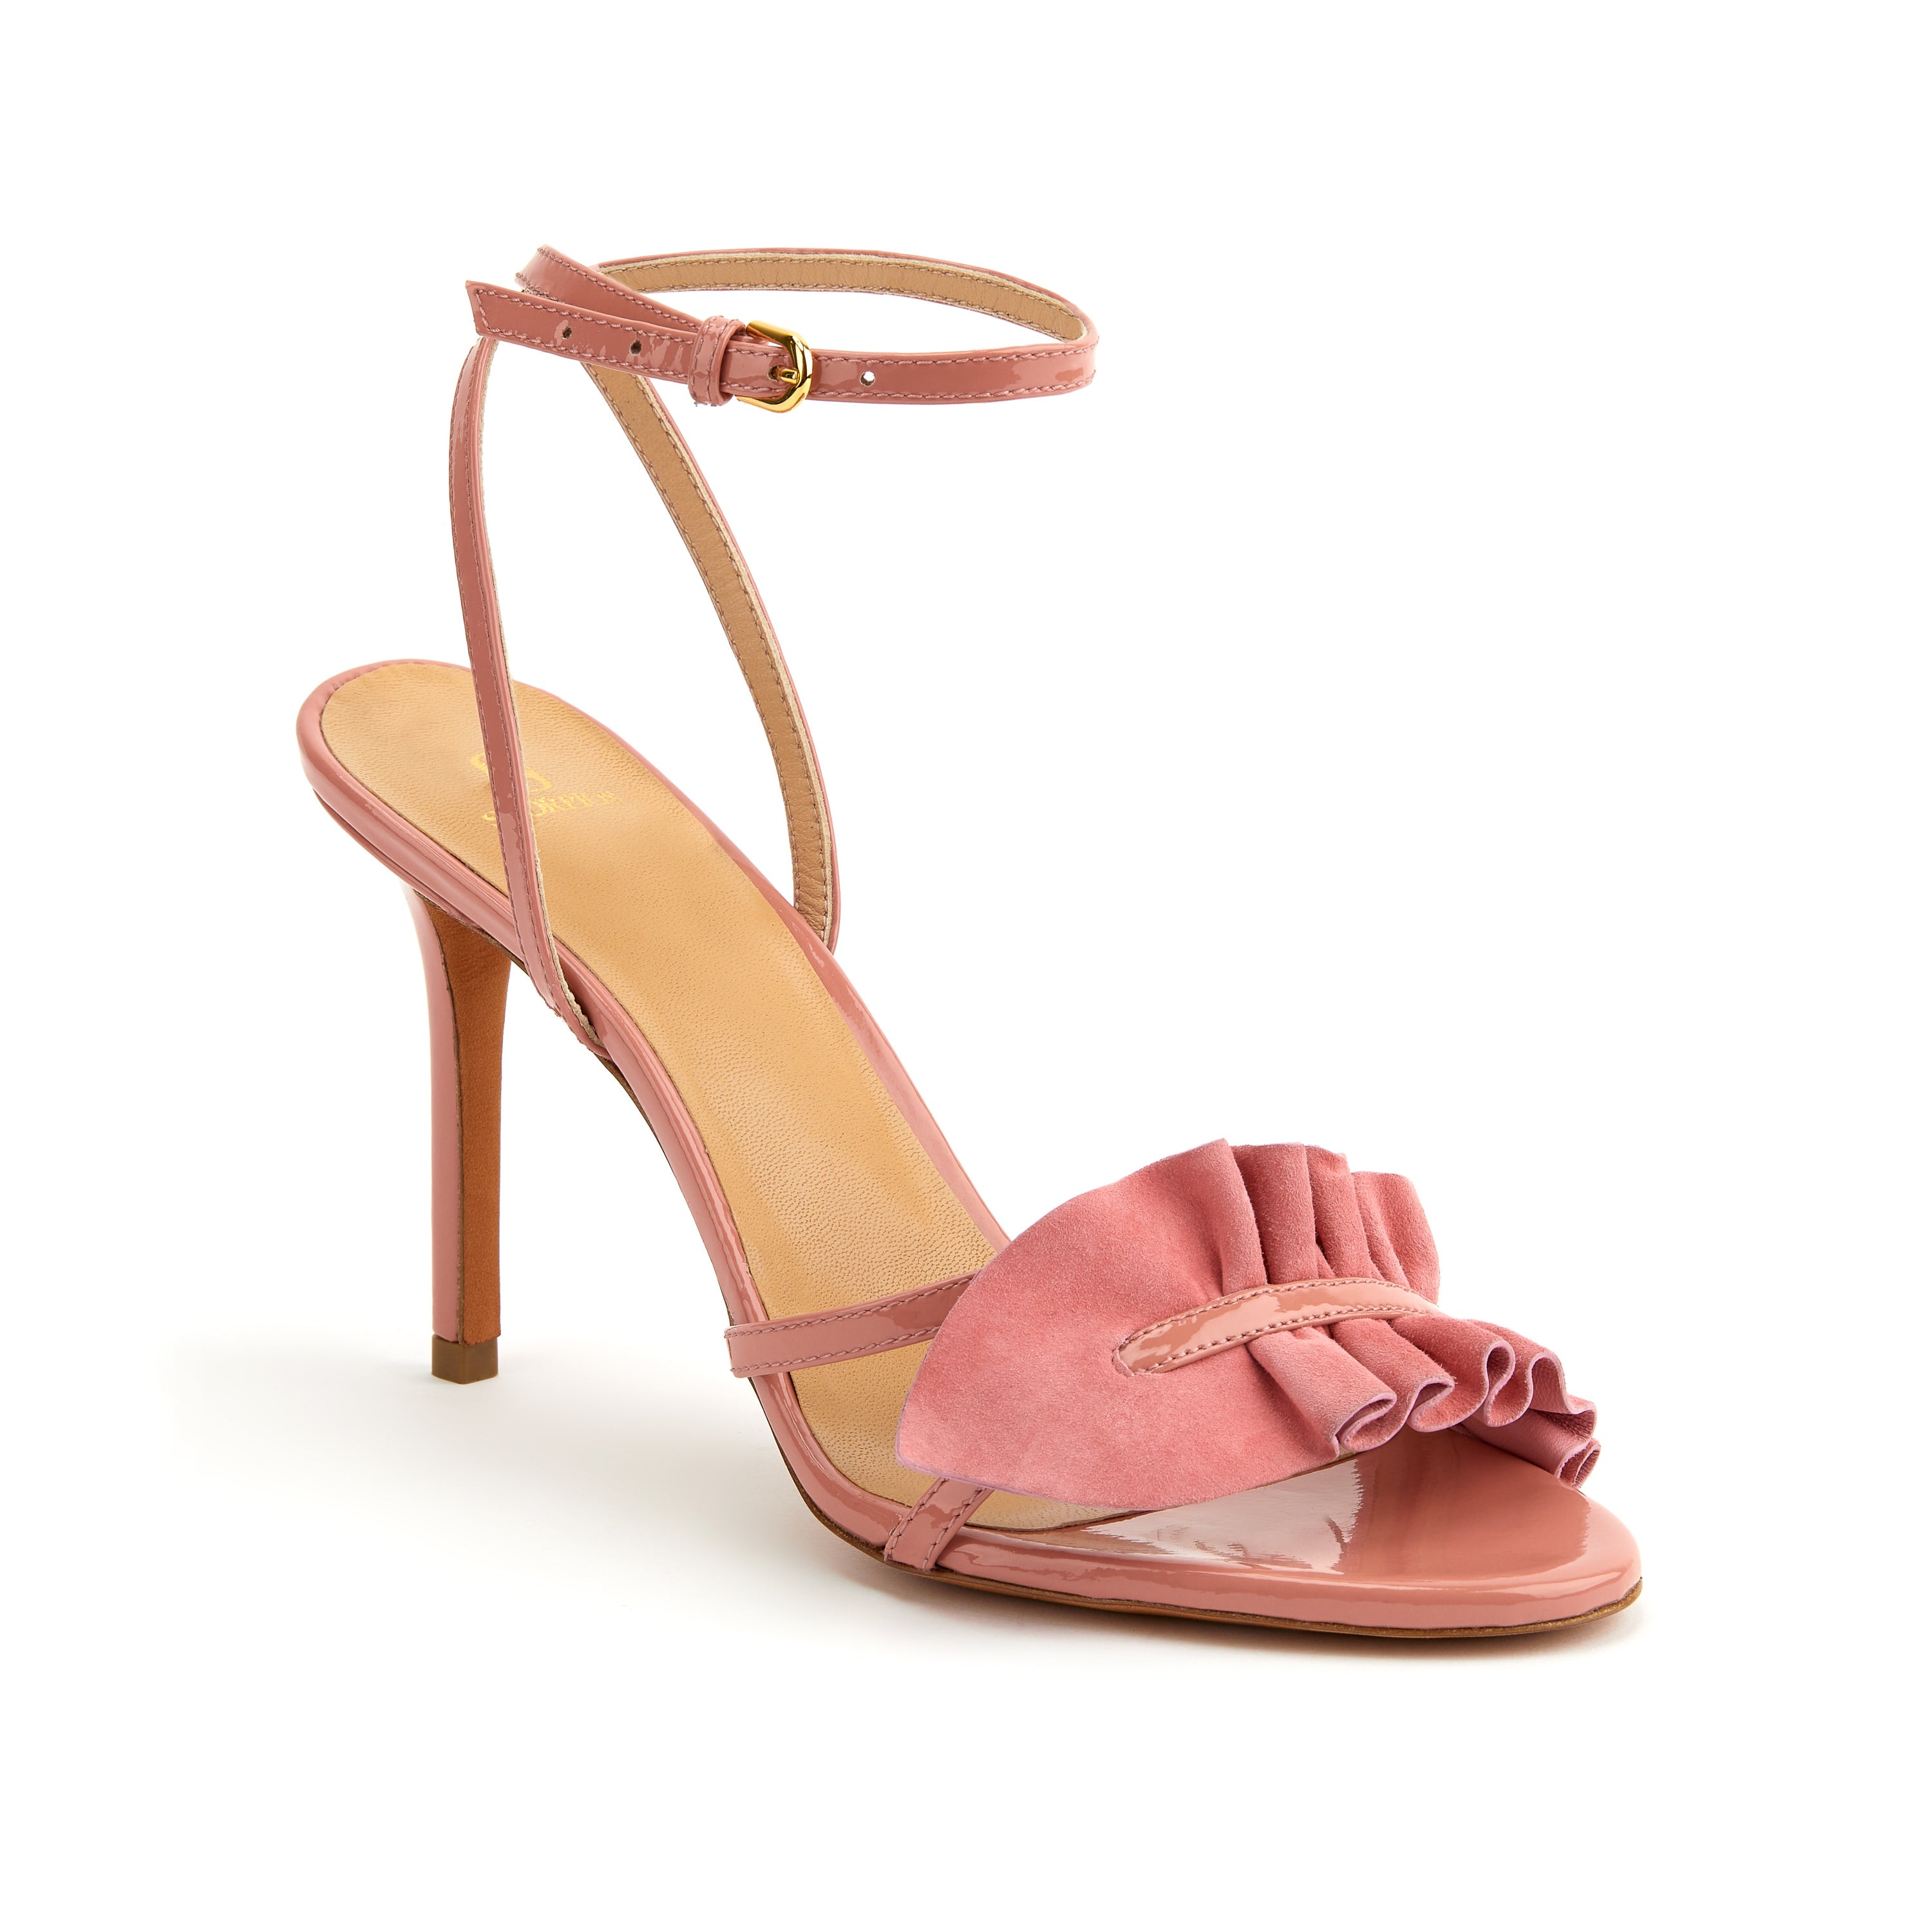 Almudena High-heel Rose Suede Sandals